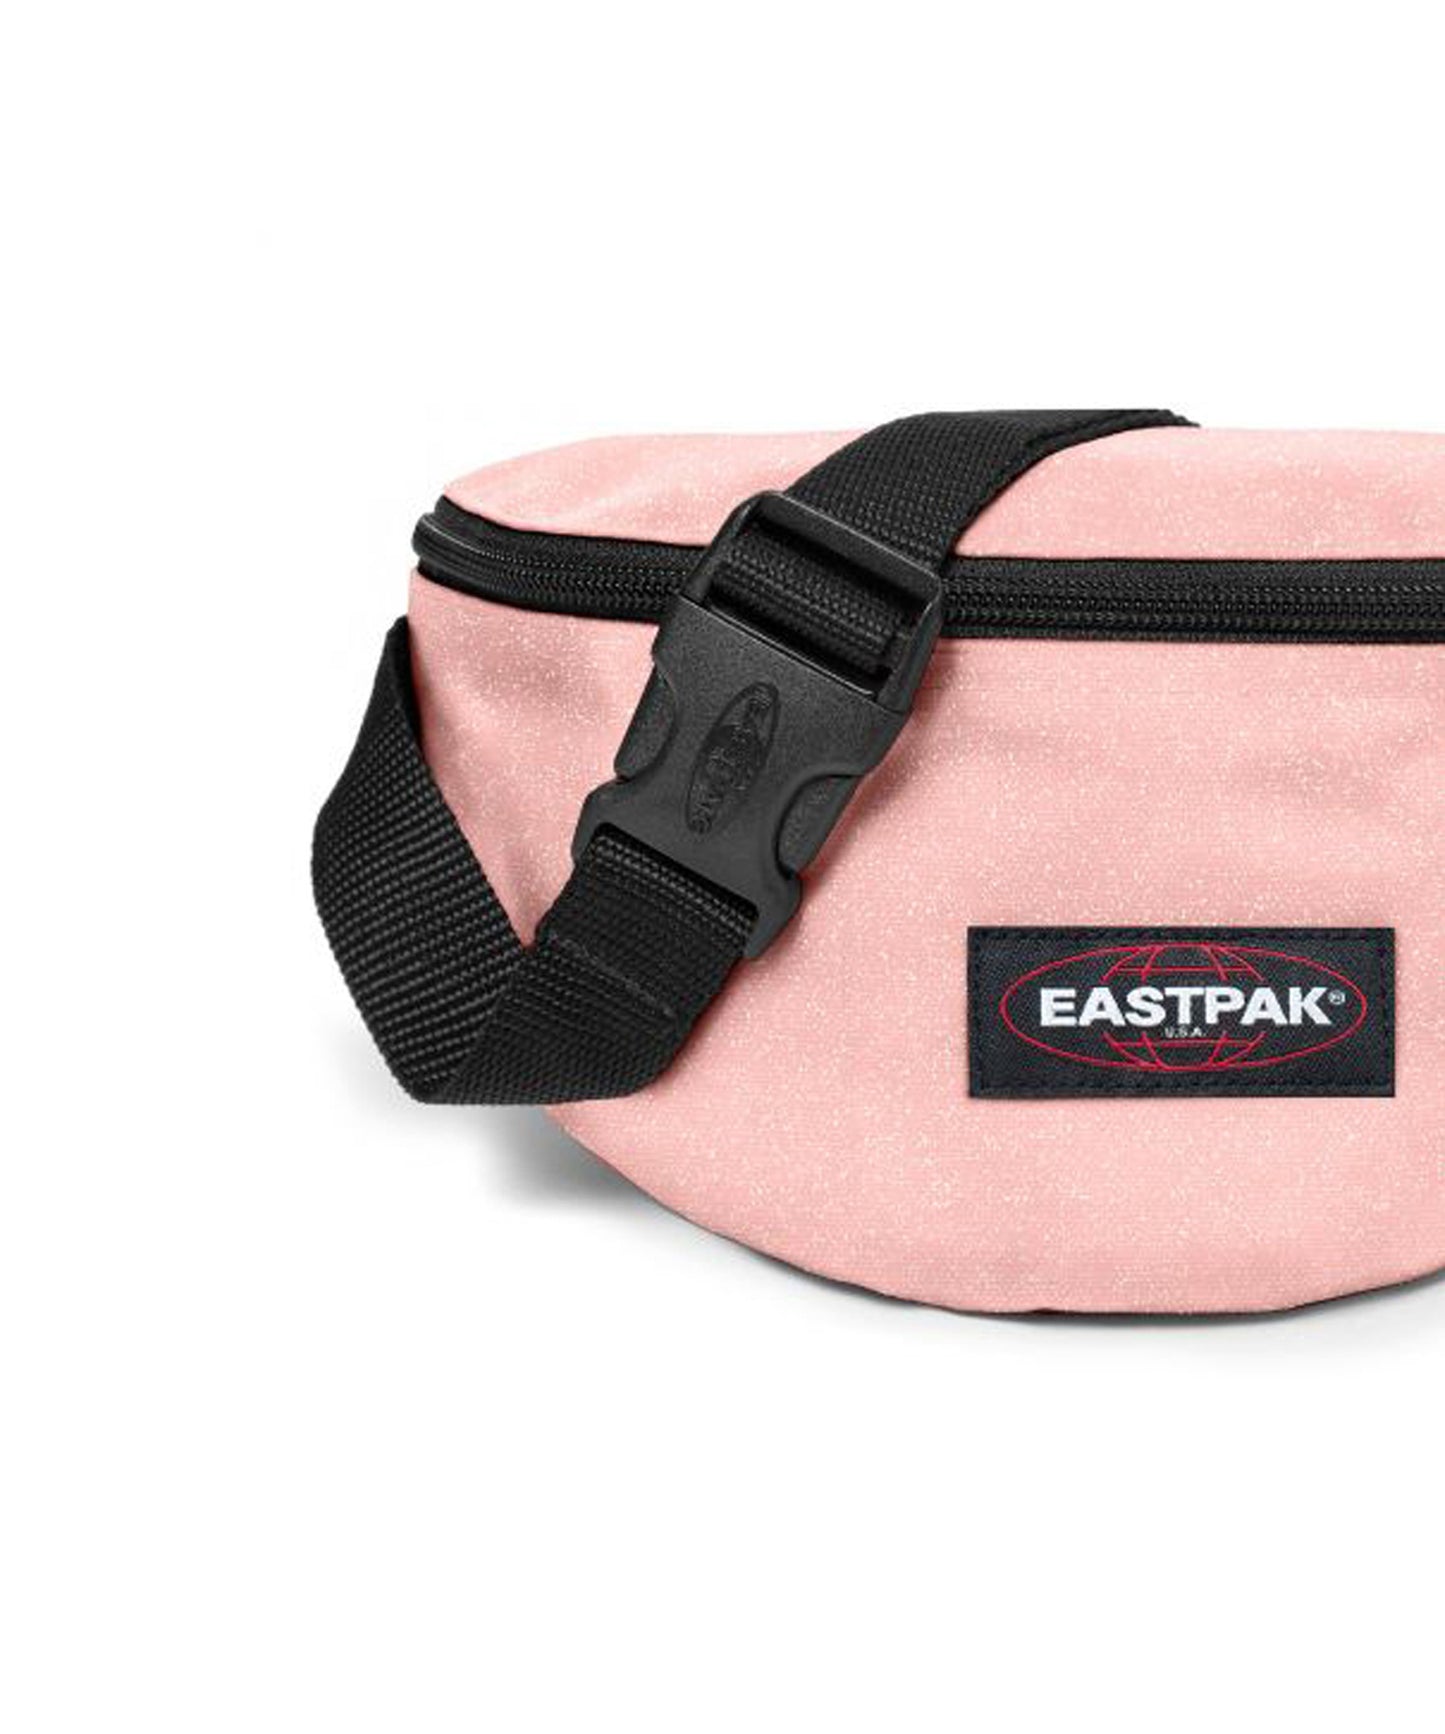 eastpak -springer riñonera SPARK-ROSE -color rosa-bolsillo trasero-cierre cremallera-producto impermeable y vegano.